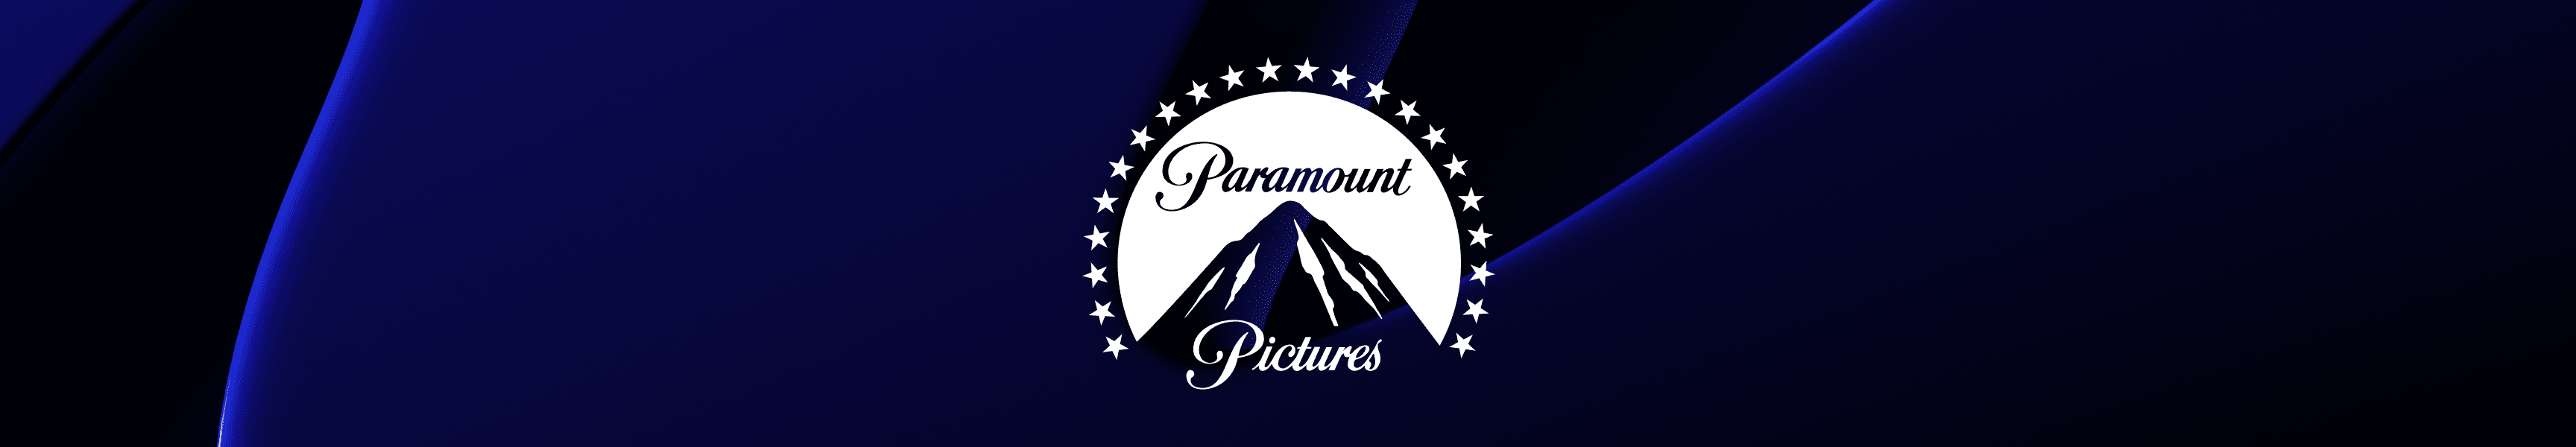 Paramount Pictures Pegatinas